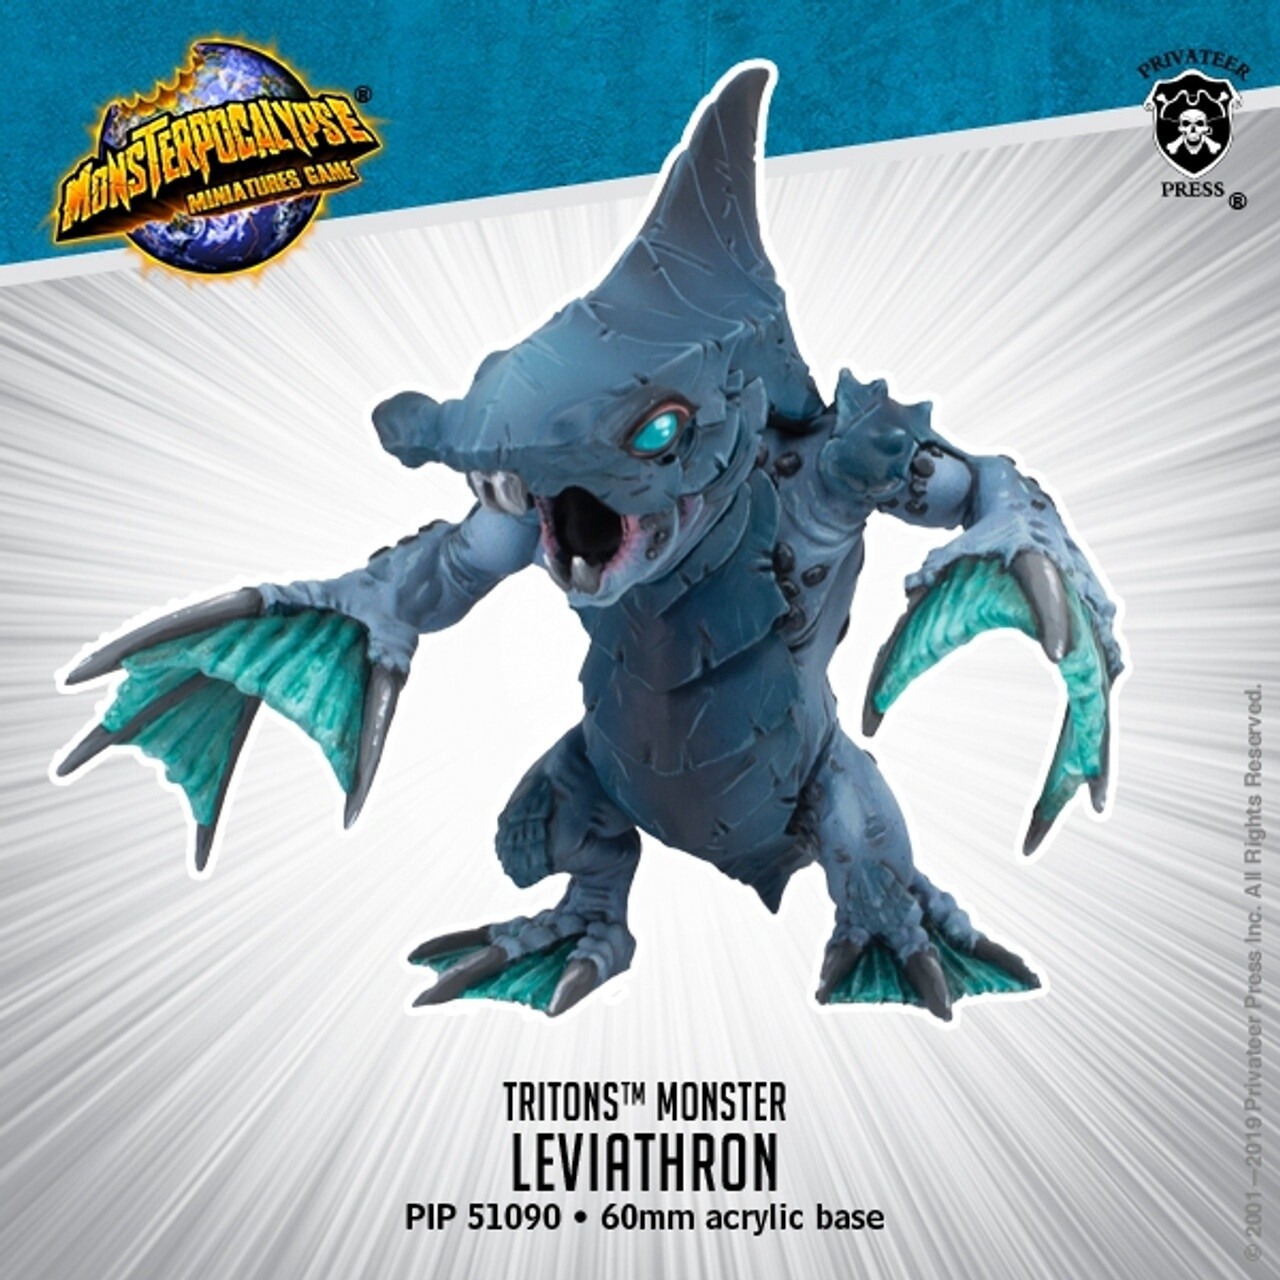 Tritons Monster - Leviathron